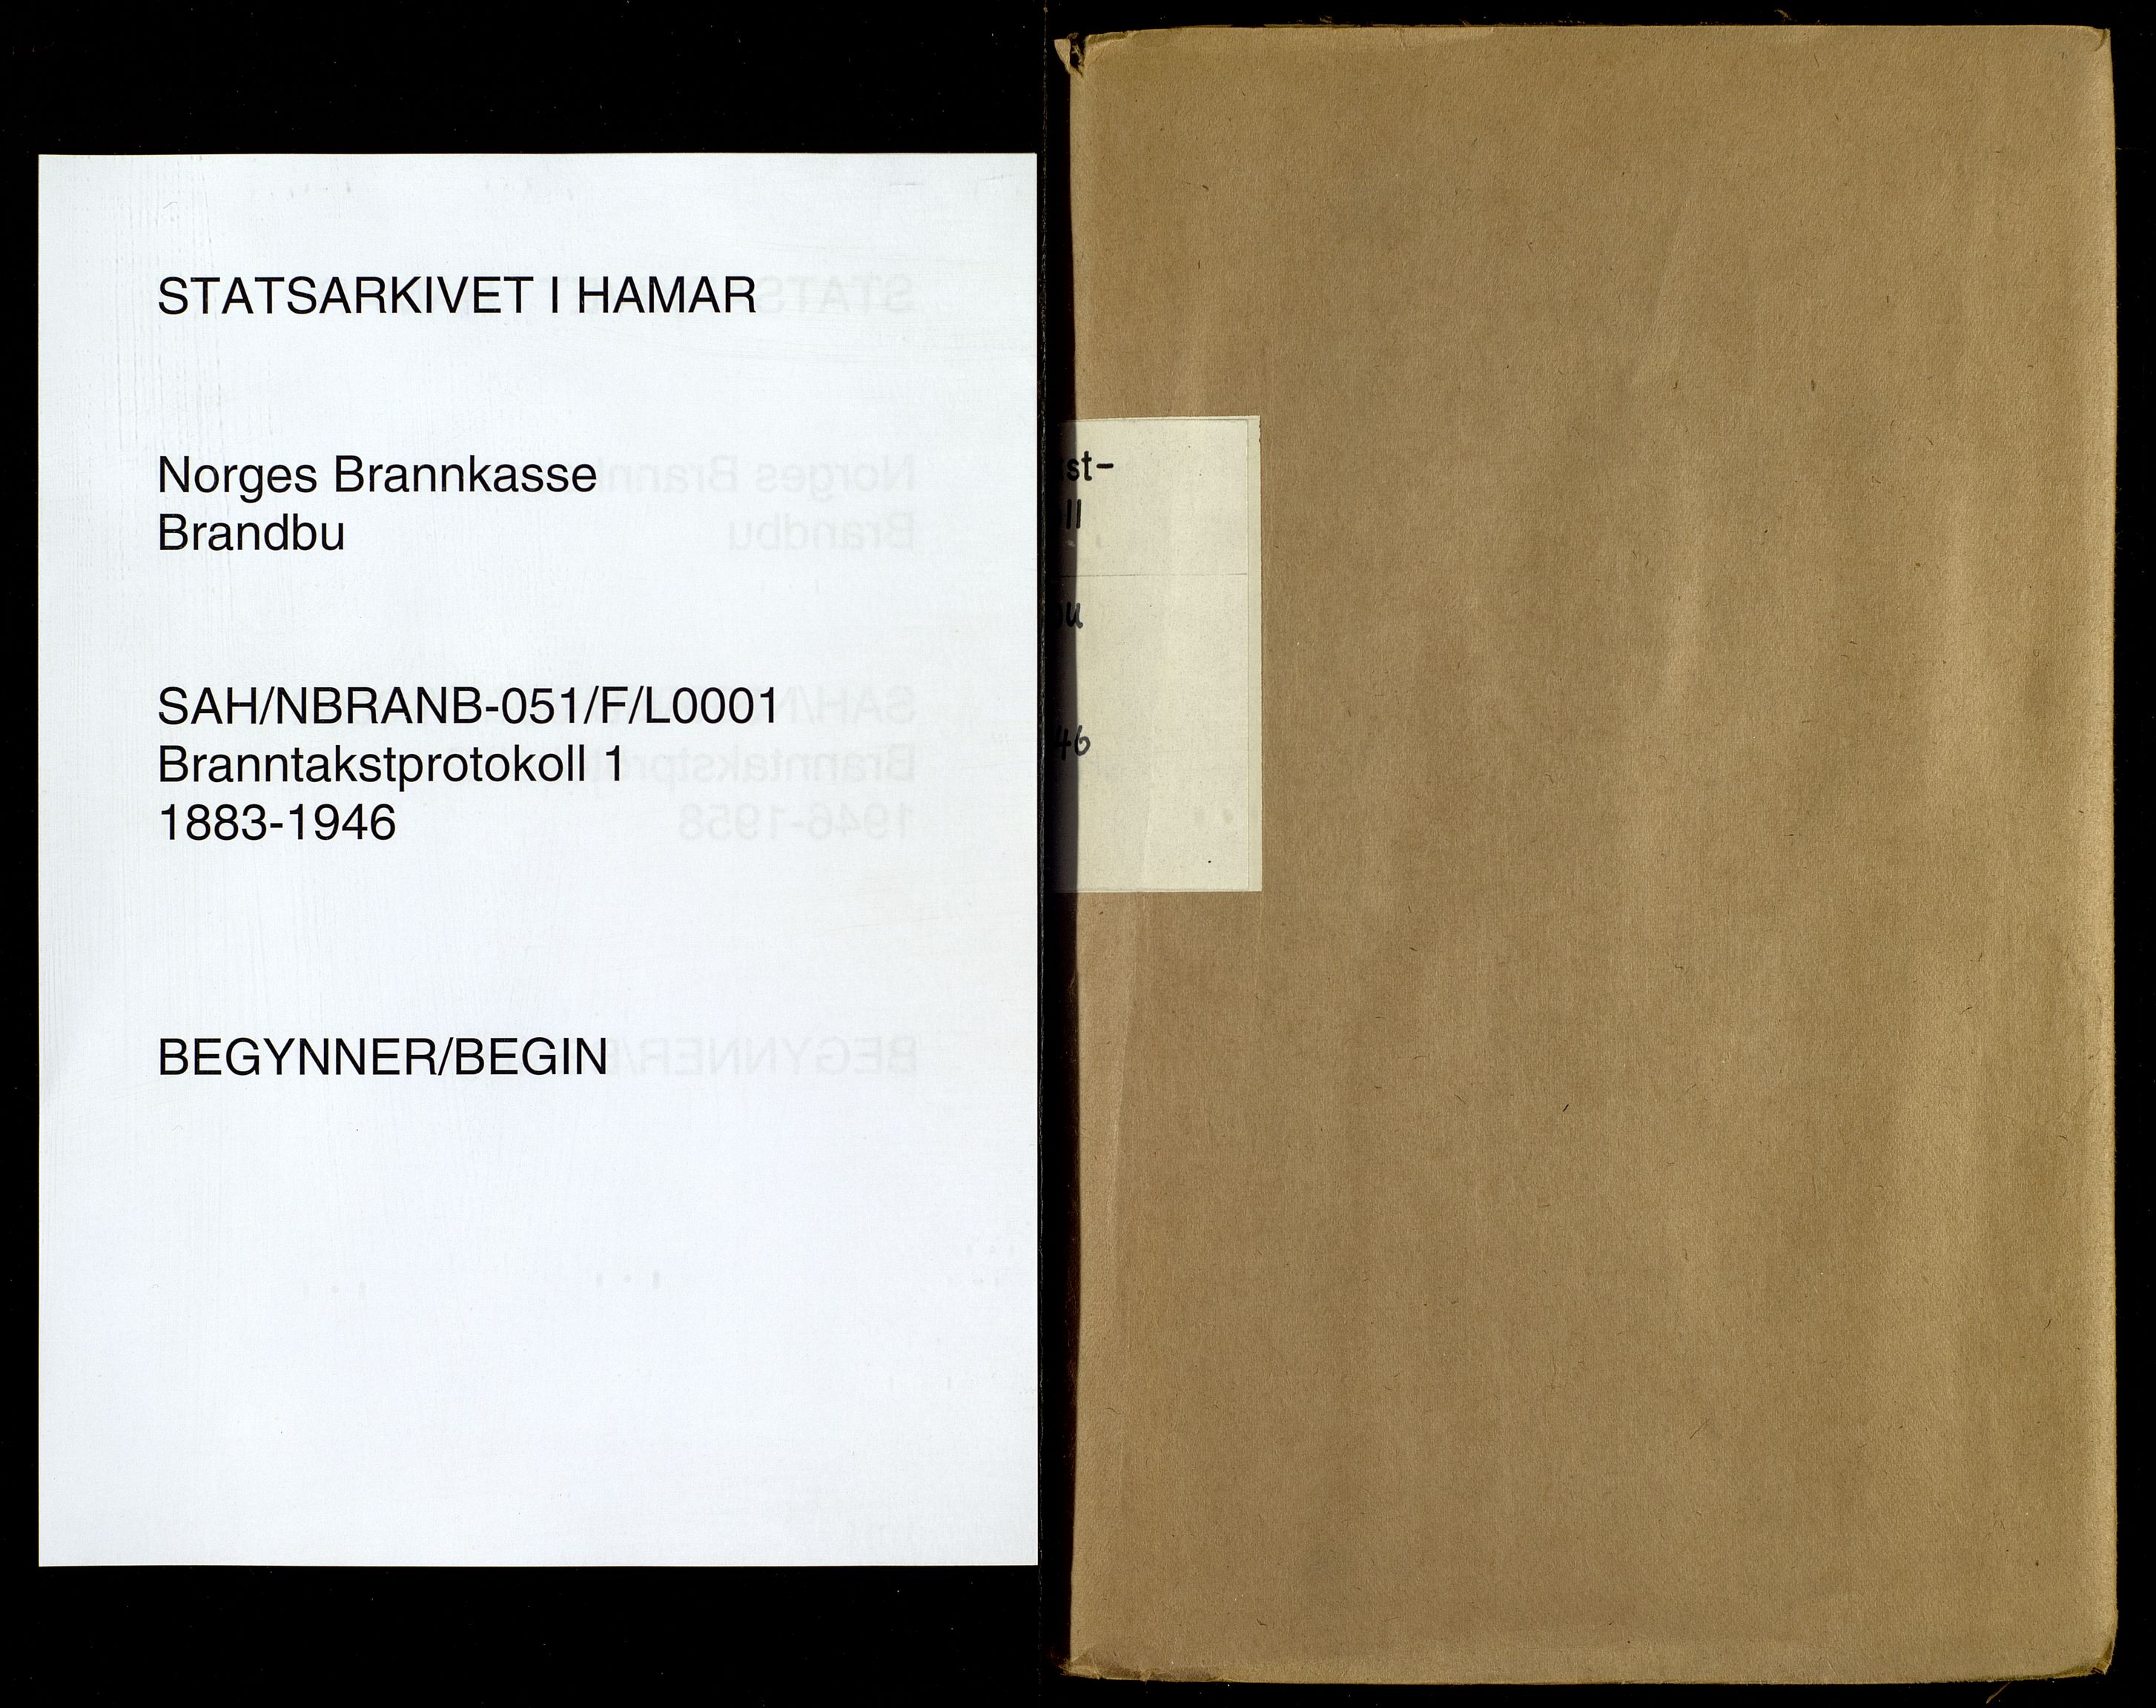 Norges Brannkasse, Brandbu, SAH/NBRANB-051/F/L0001: Branntakstprotokoll, 1883-1946